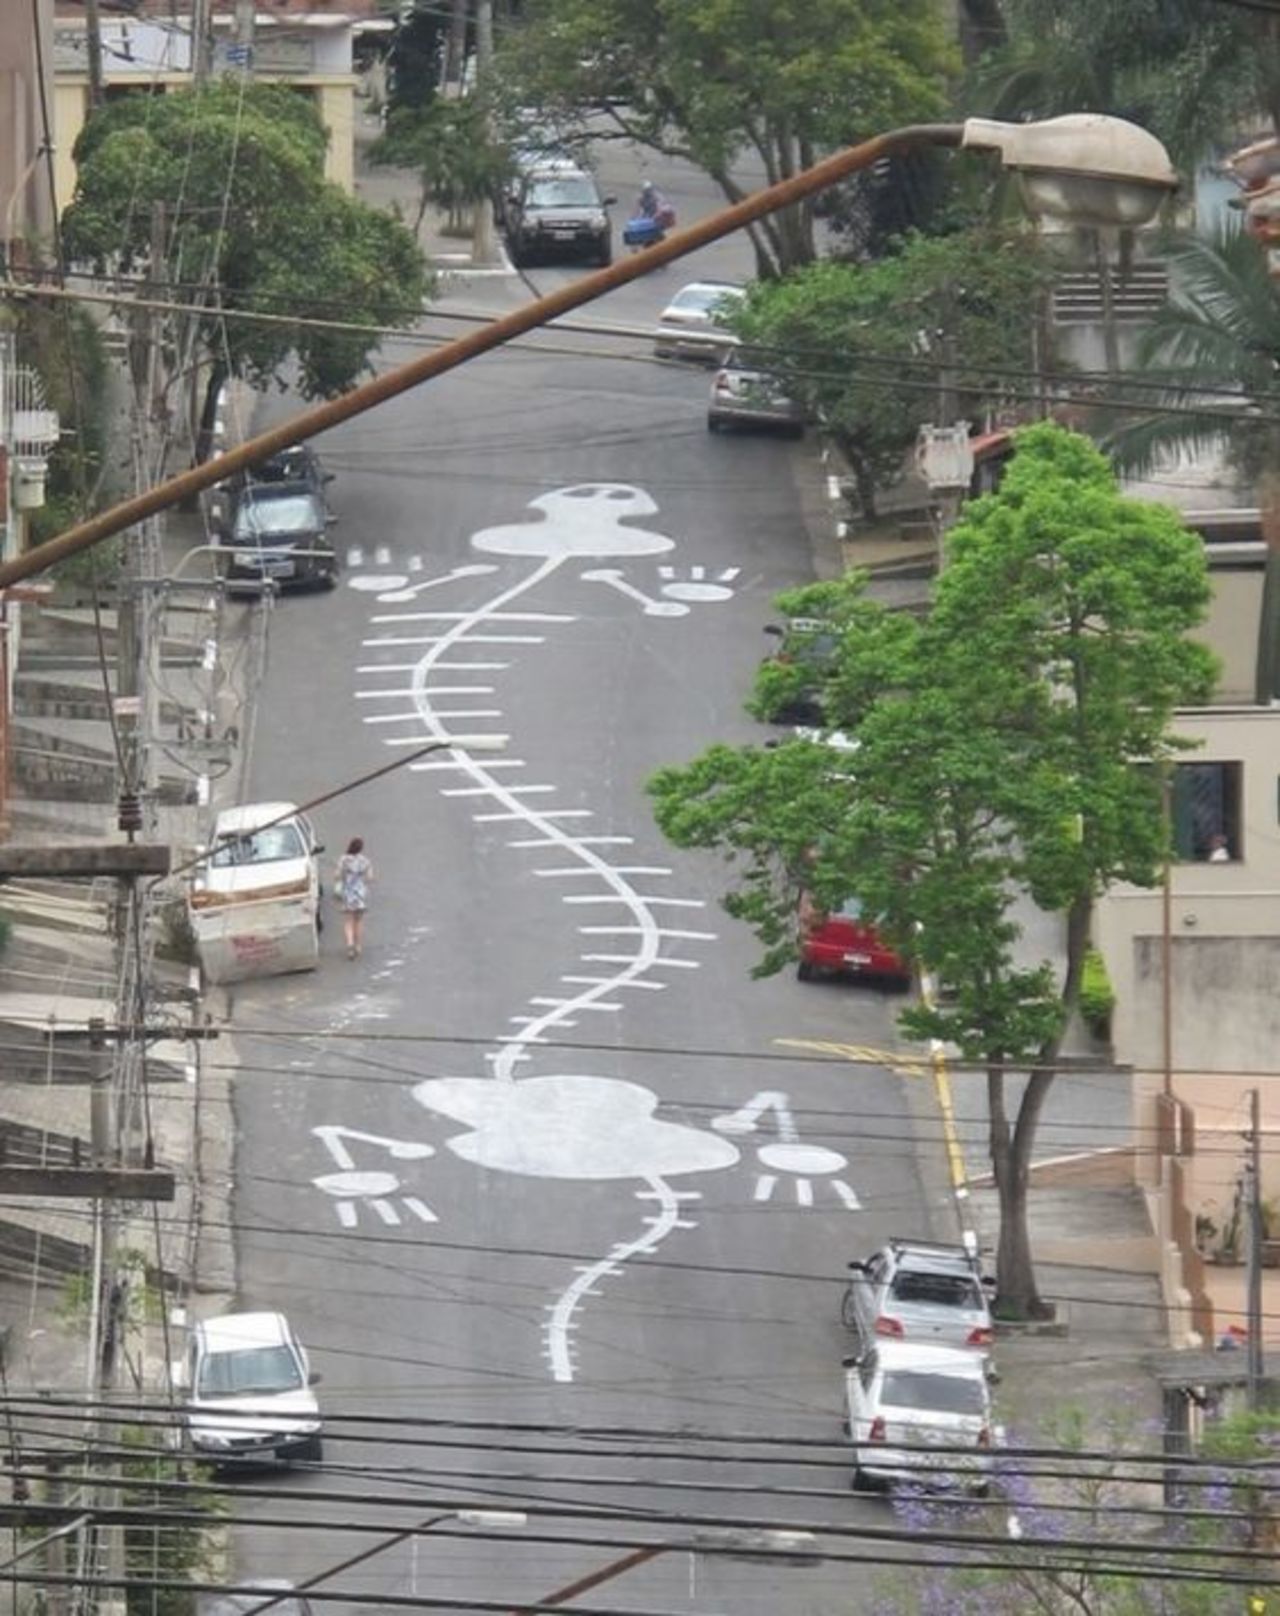 Street #art hits the street in Sao Paolo, Brazil #travel https://t.co/taYD3JMYXA